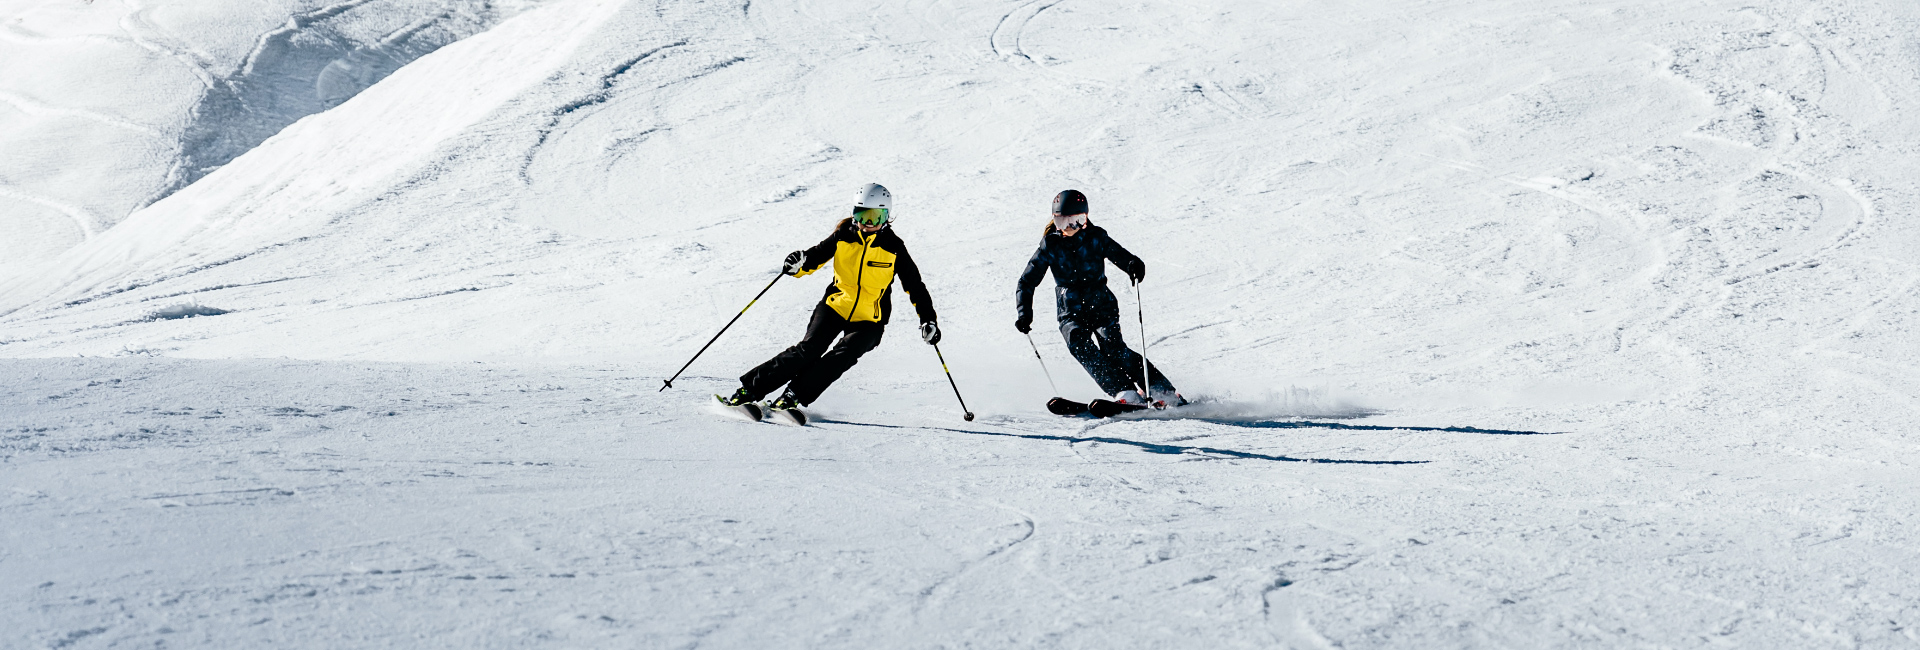 JOY 11 Damen Schi Ski NEU MONTAGE ! MODELL 2019-2020 HEAD SUPER JOY DAMENSKI 